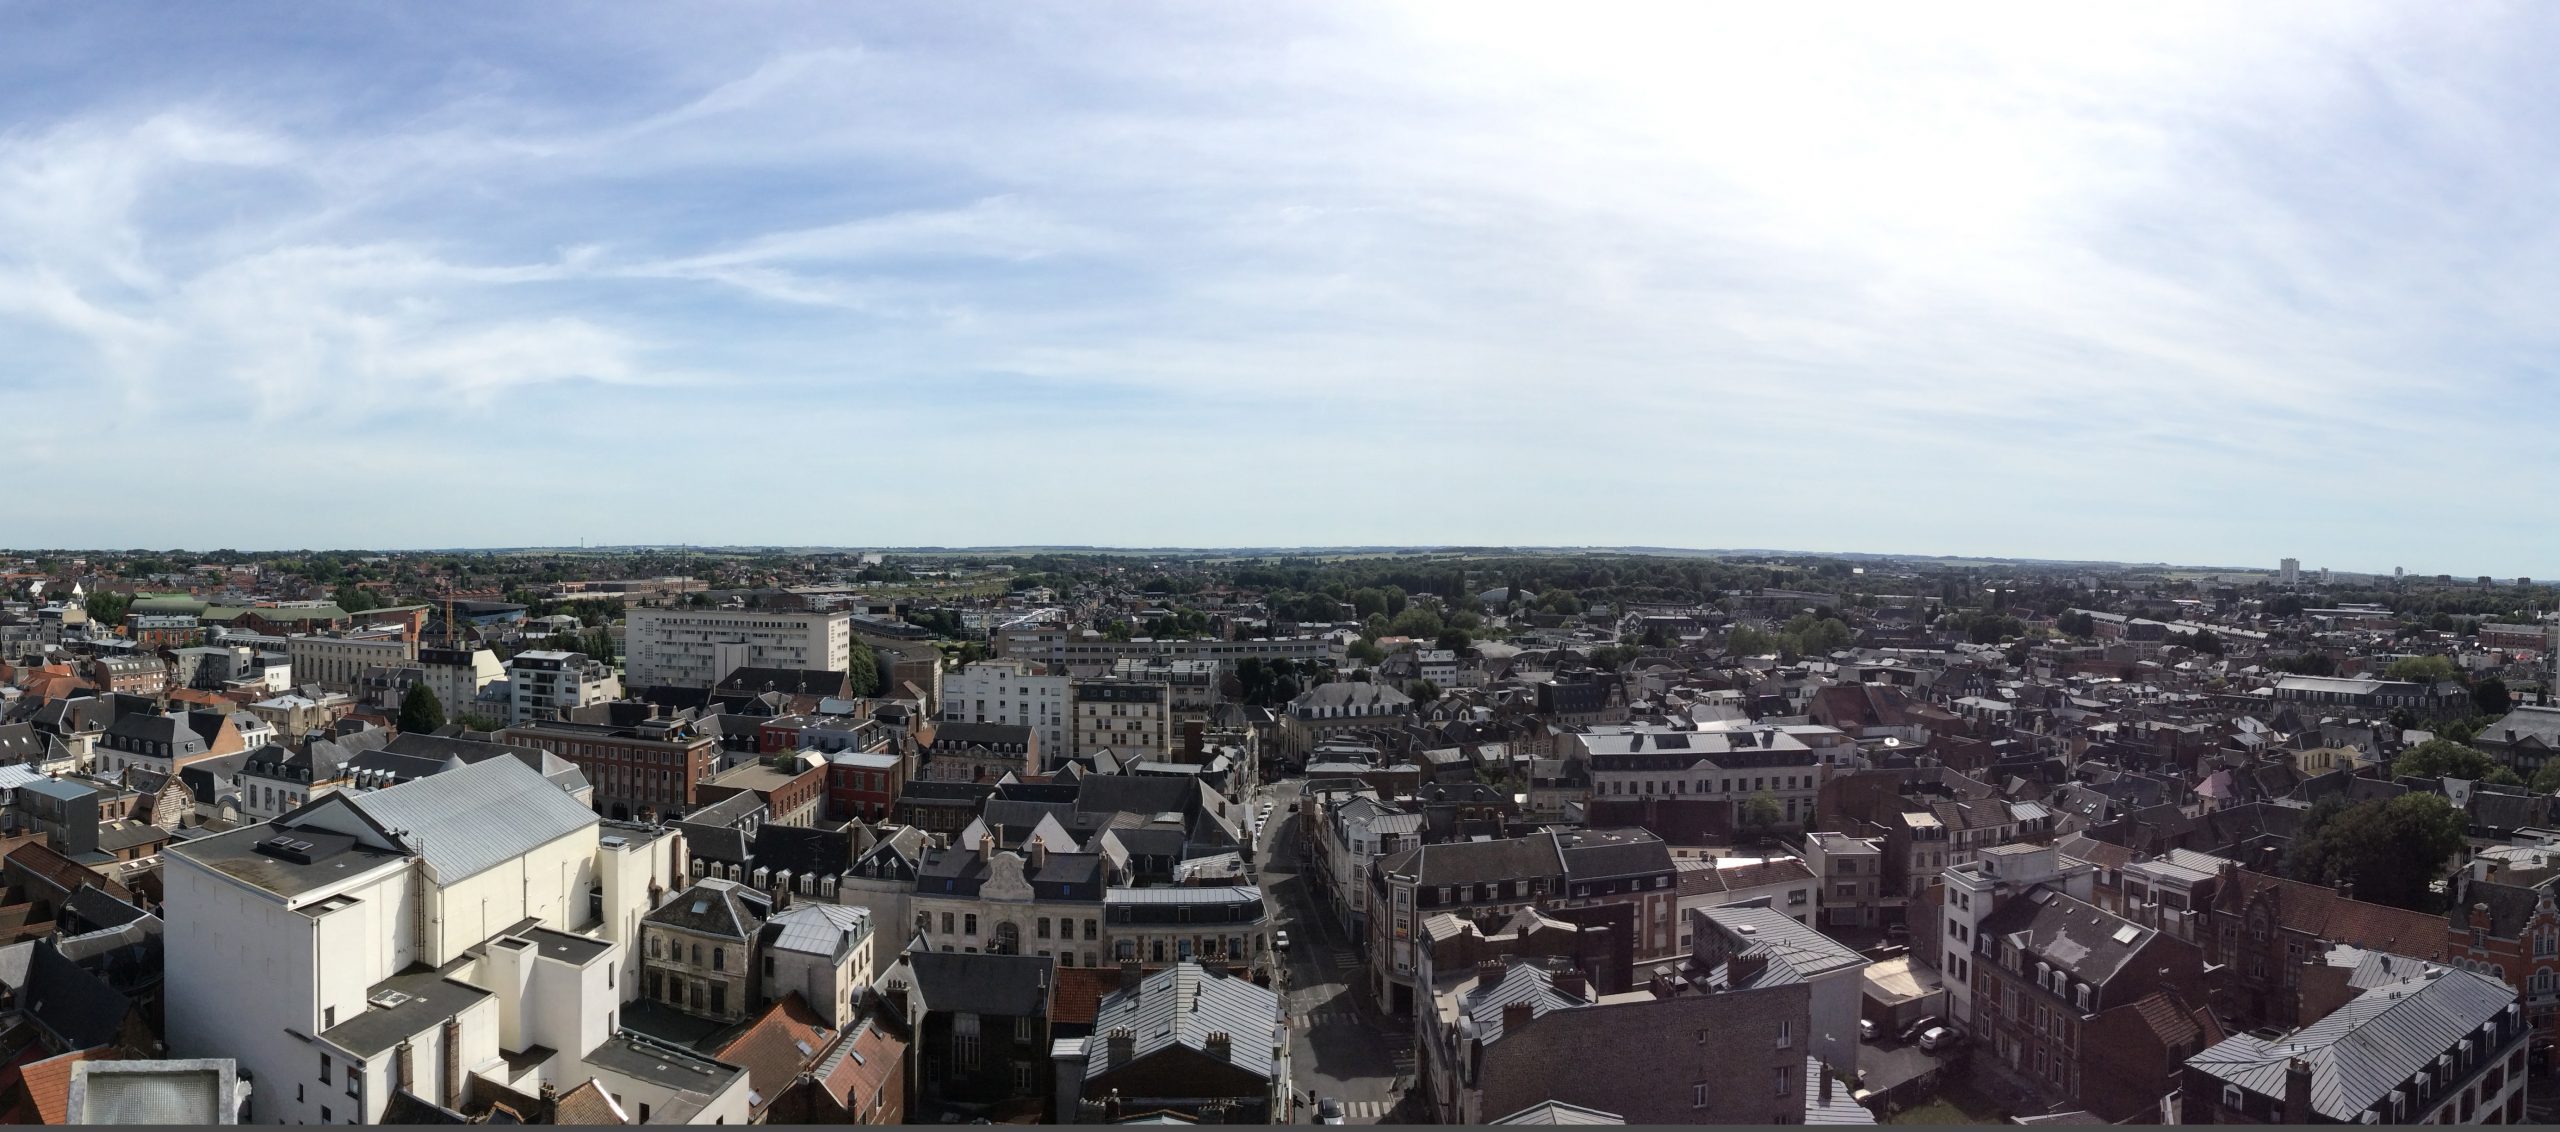 City of Arras France